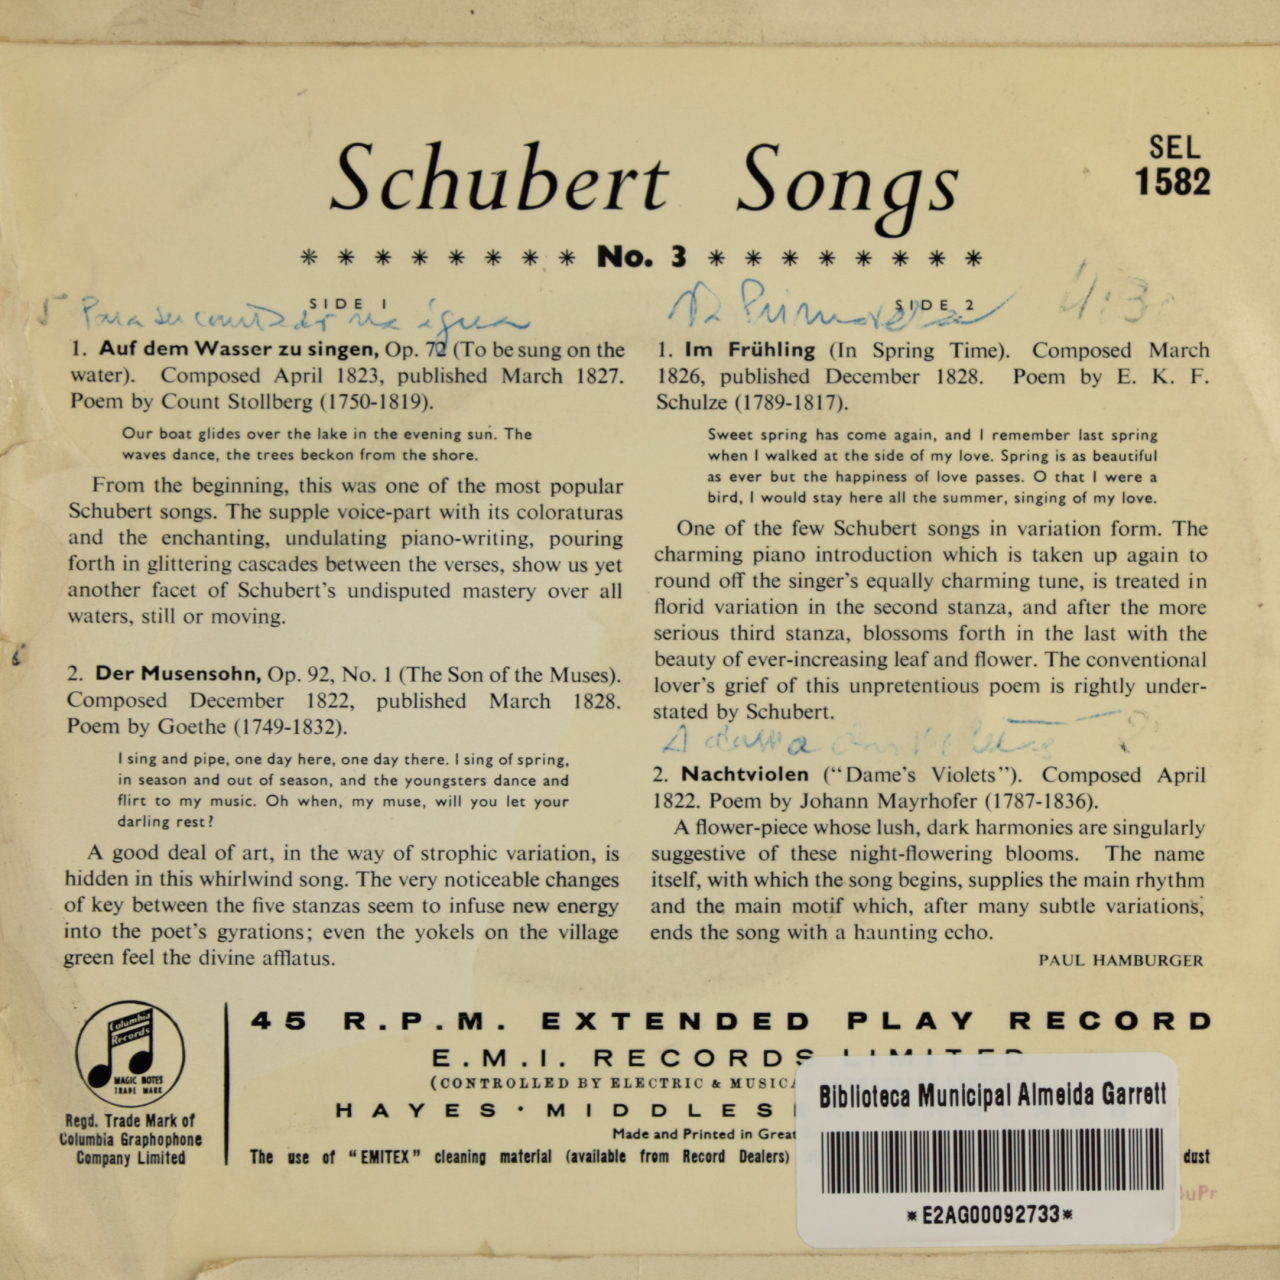 Schubert Song Recital No. 3